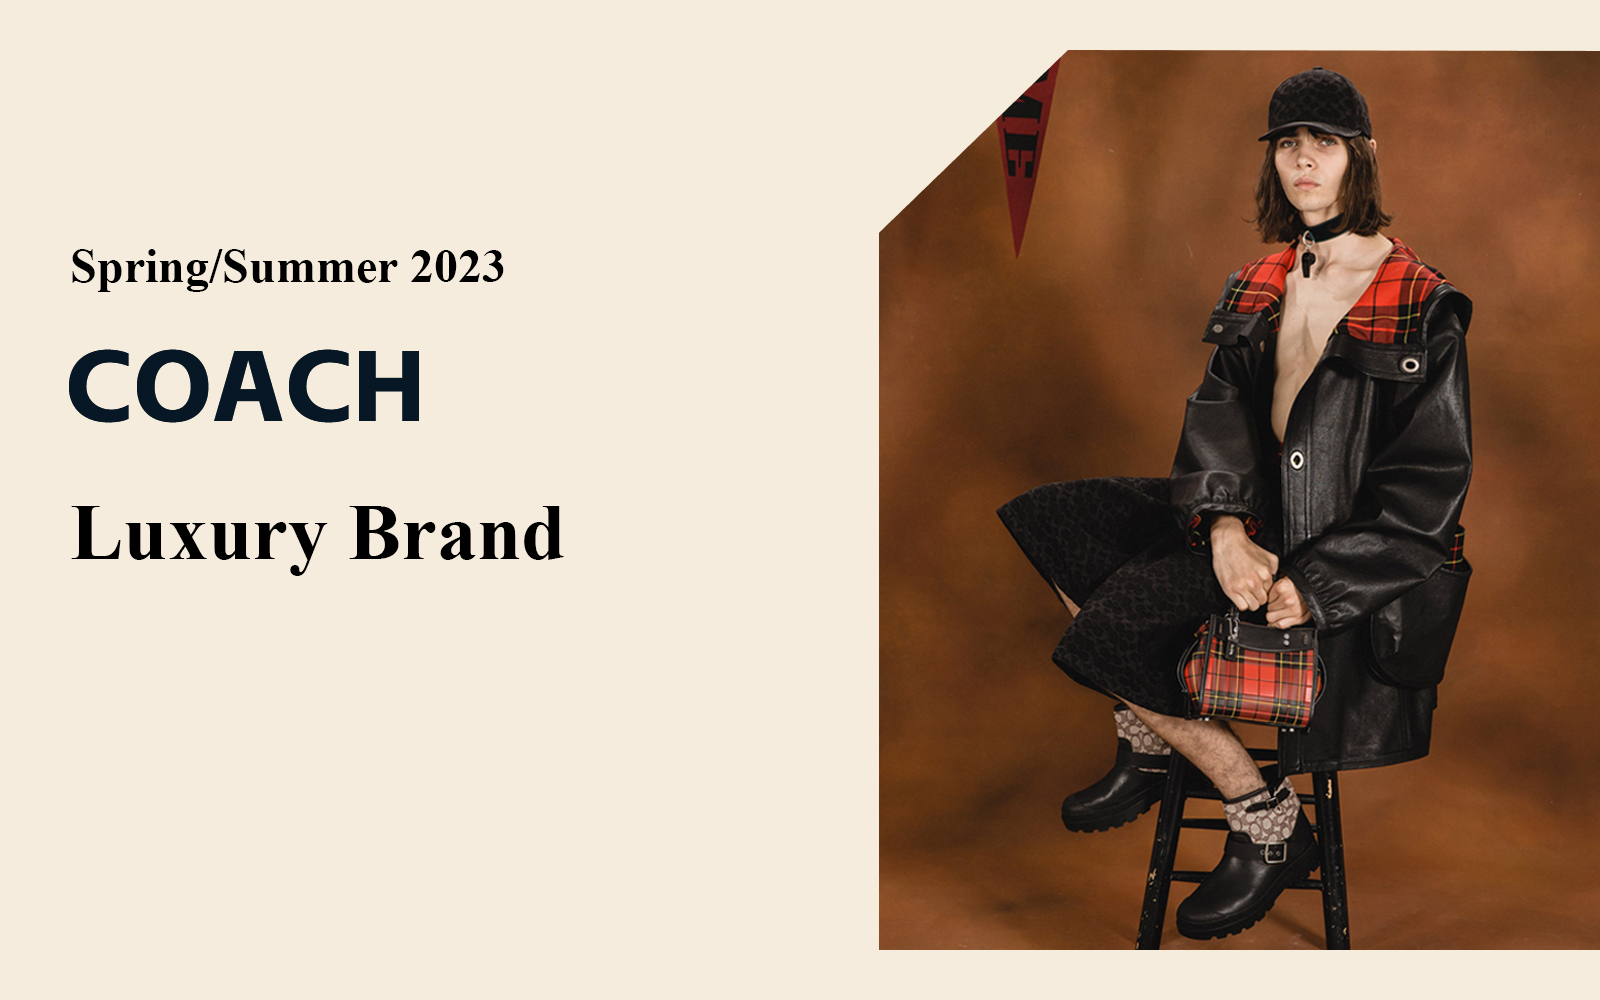 Retro Modern -- The Analysis of COACH The Luxury Brand